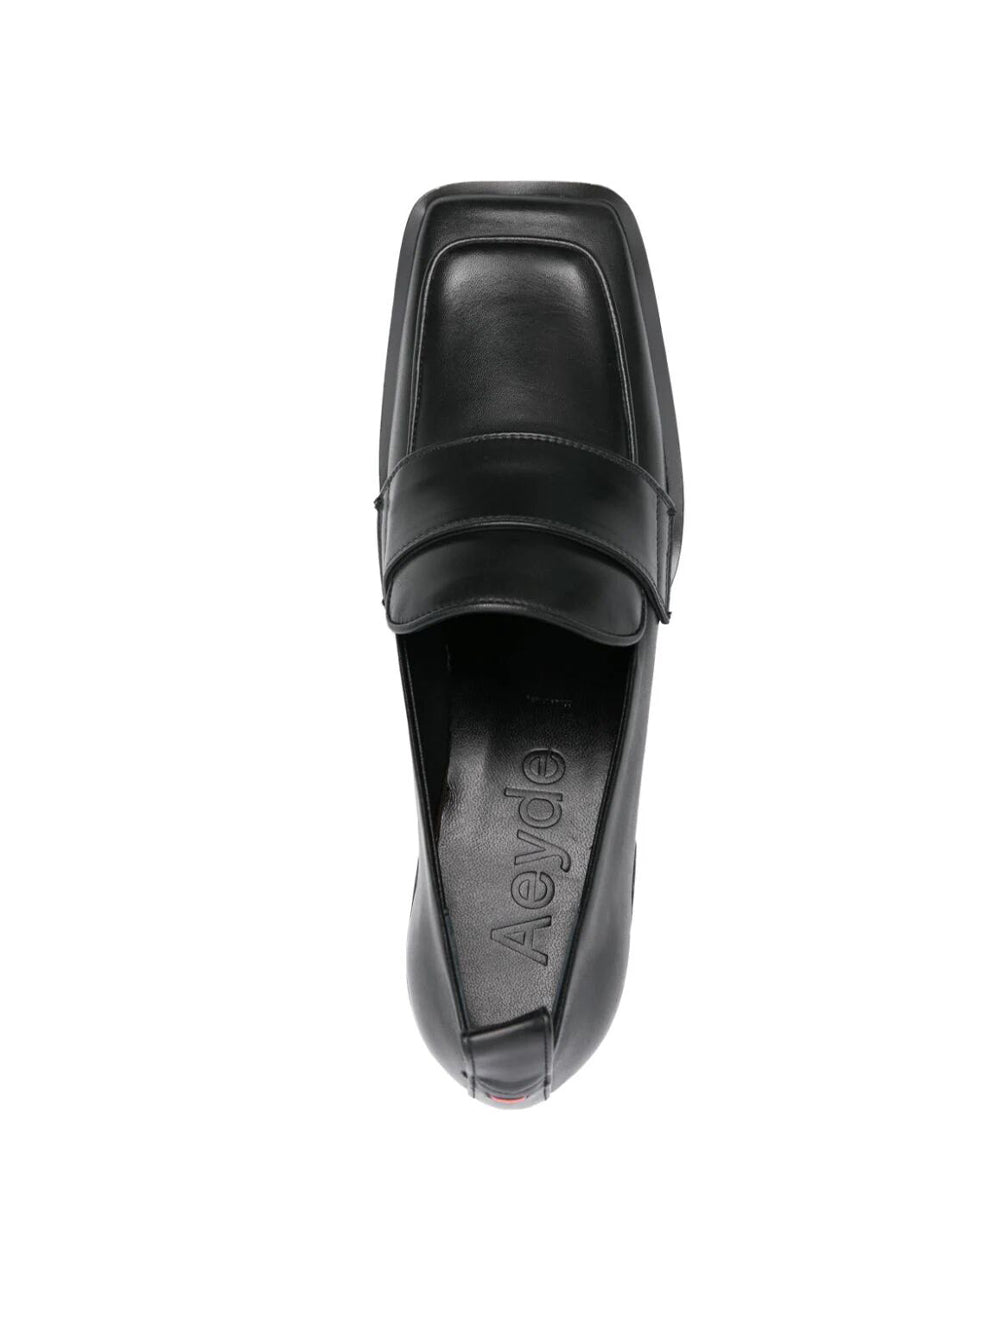 black Anka heeled loafer